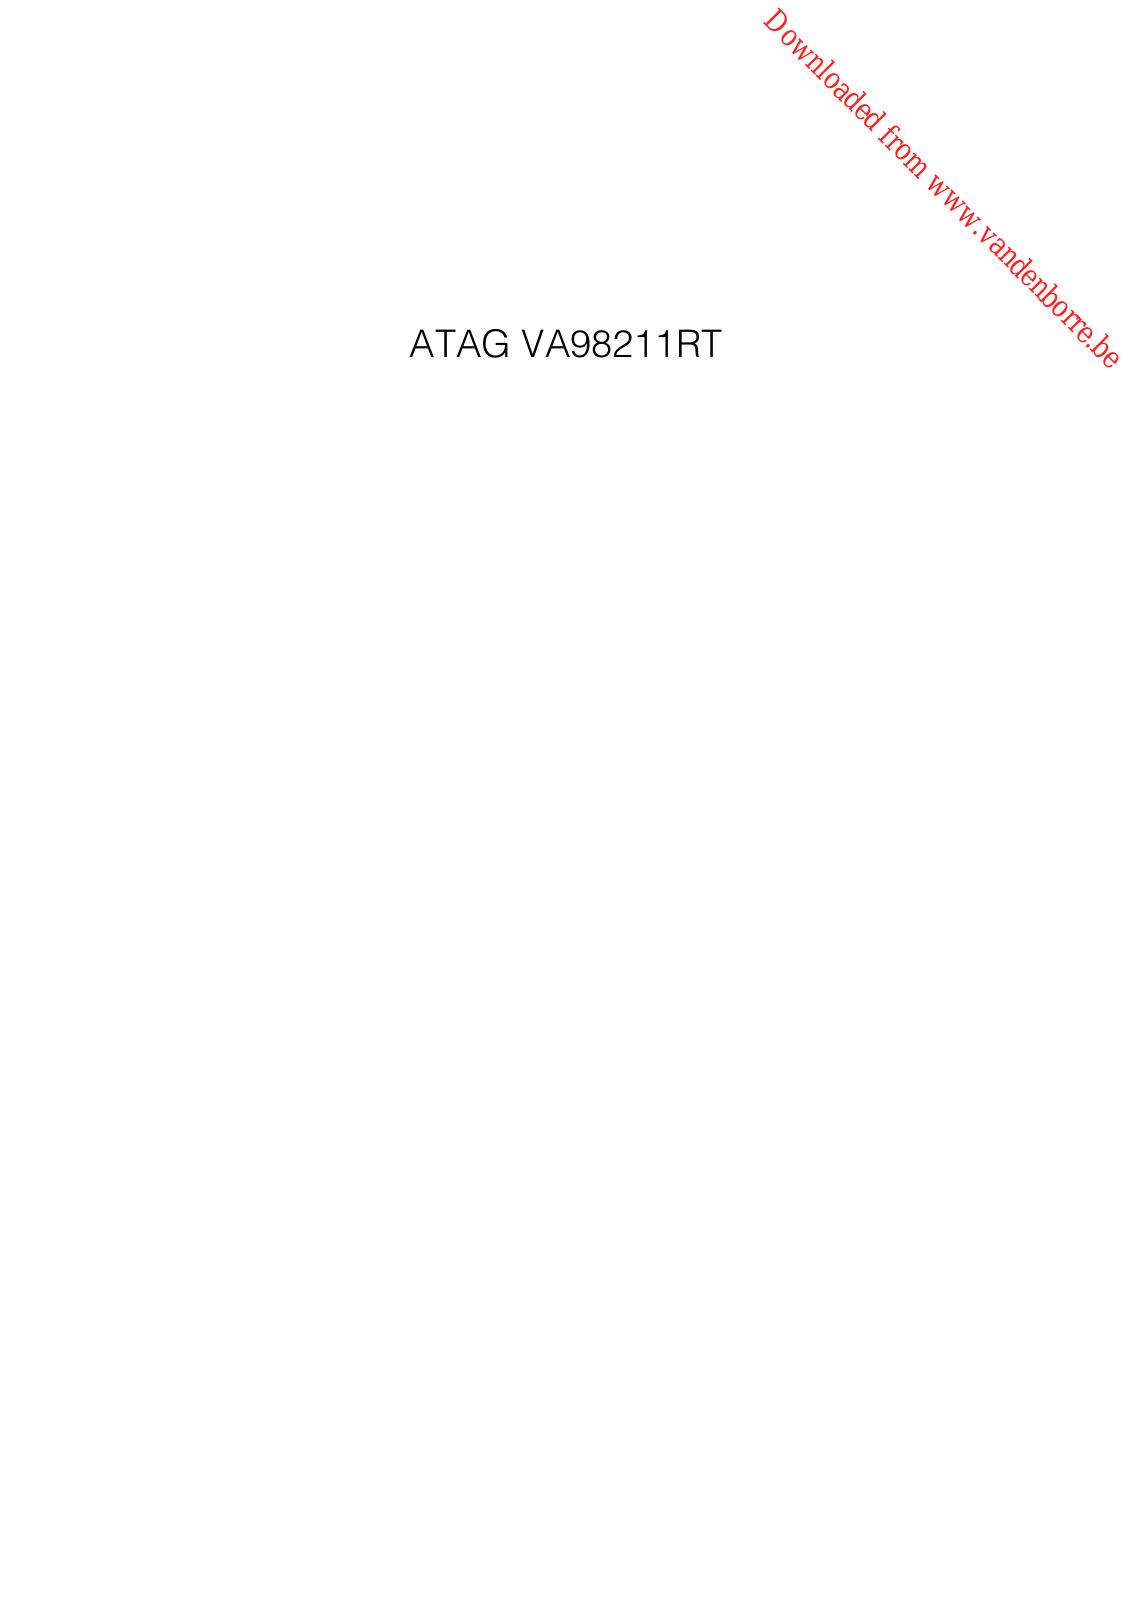 ATAG VA 68211 RT User Manual